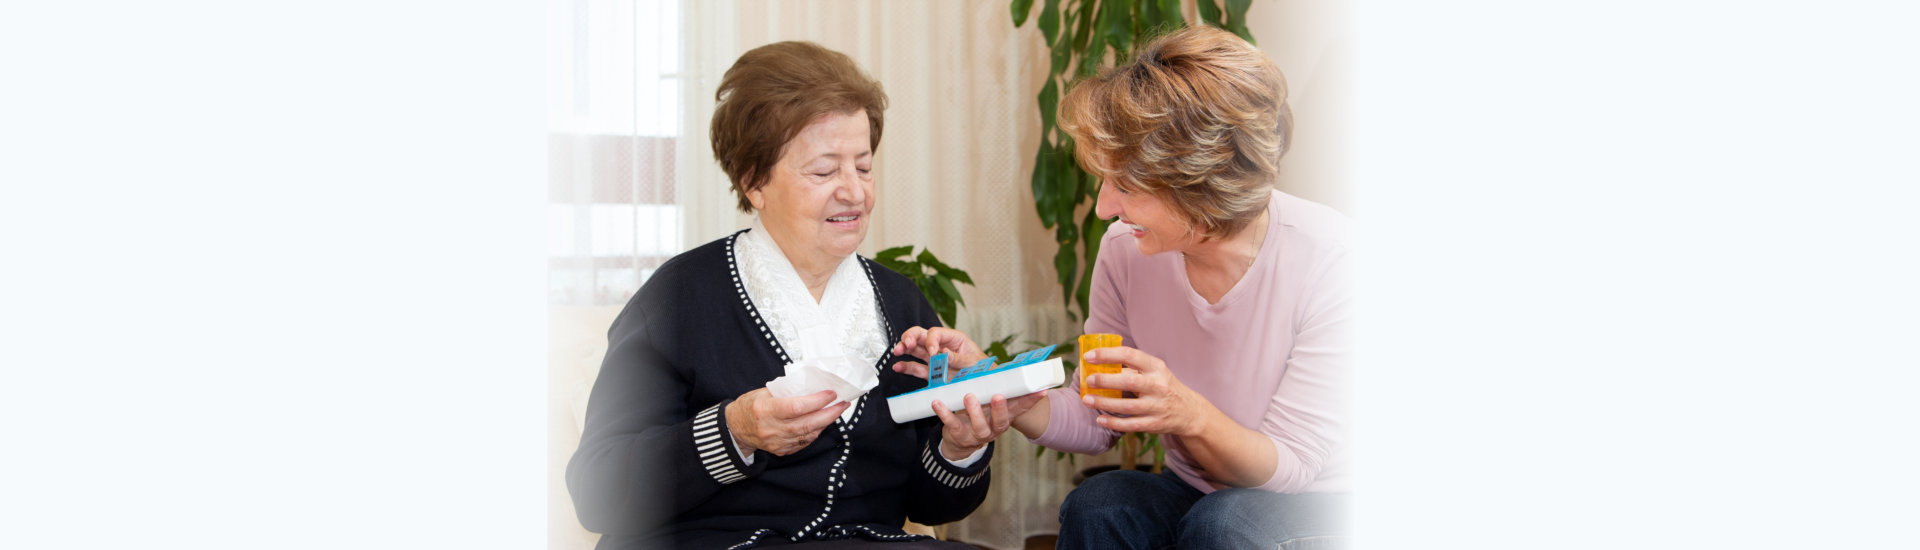 caregiver giving medicine to her patient